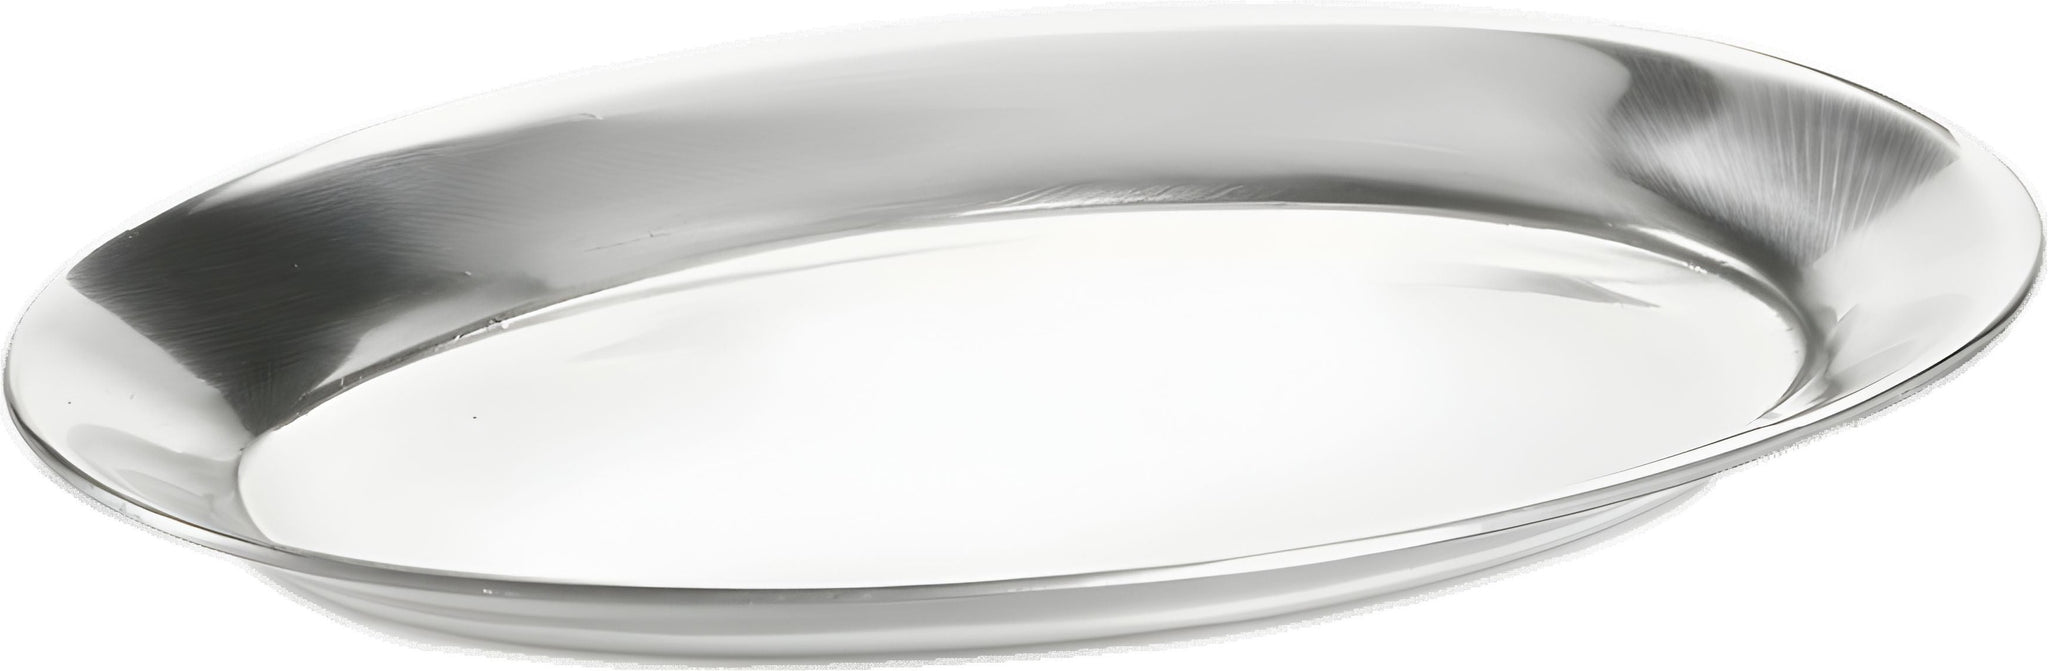 Browne - 11.5" Aluminum Sizzling Platter - 5811562